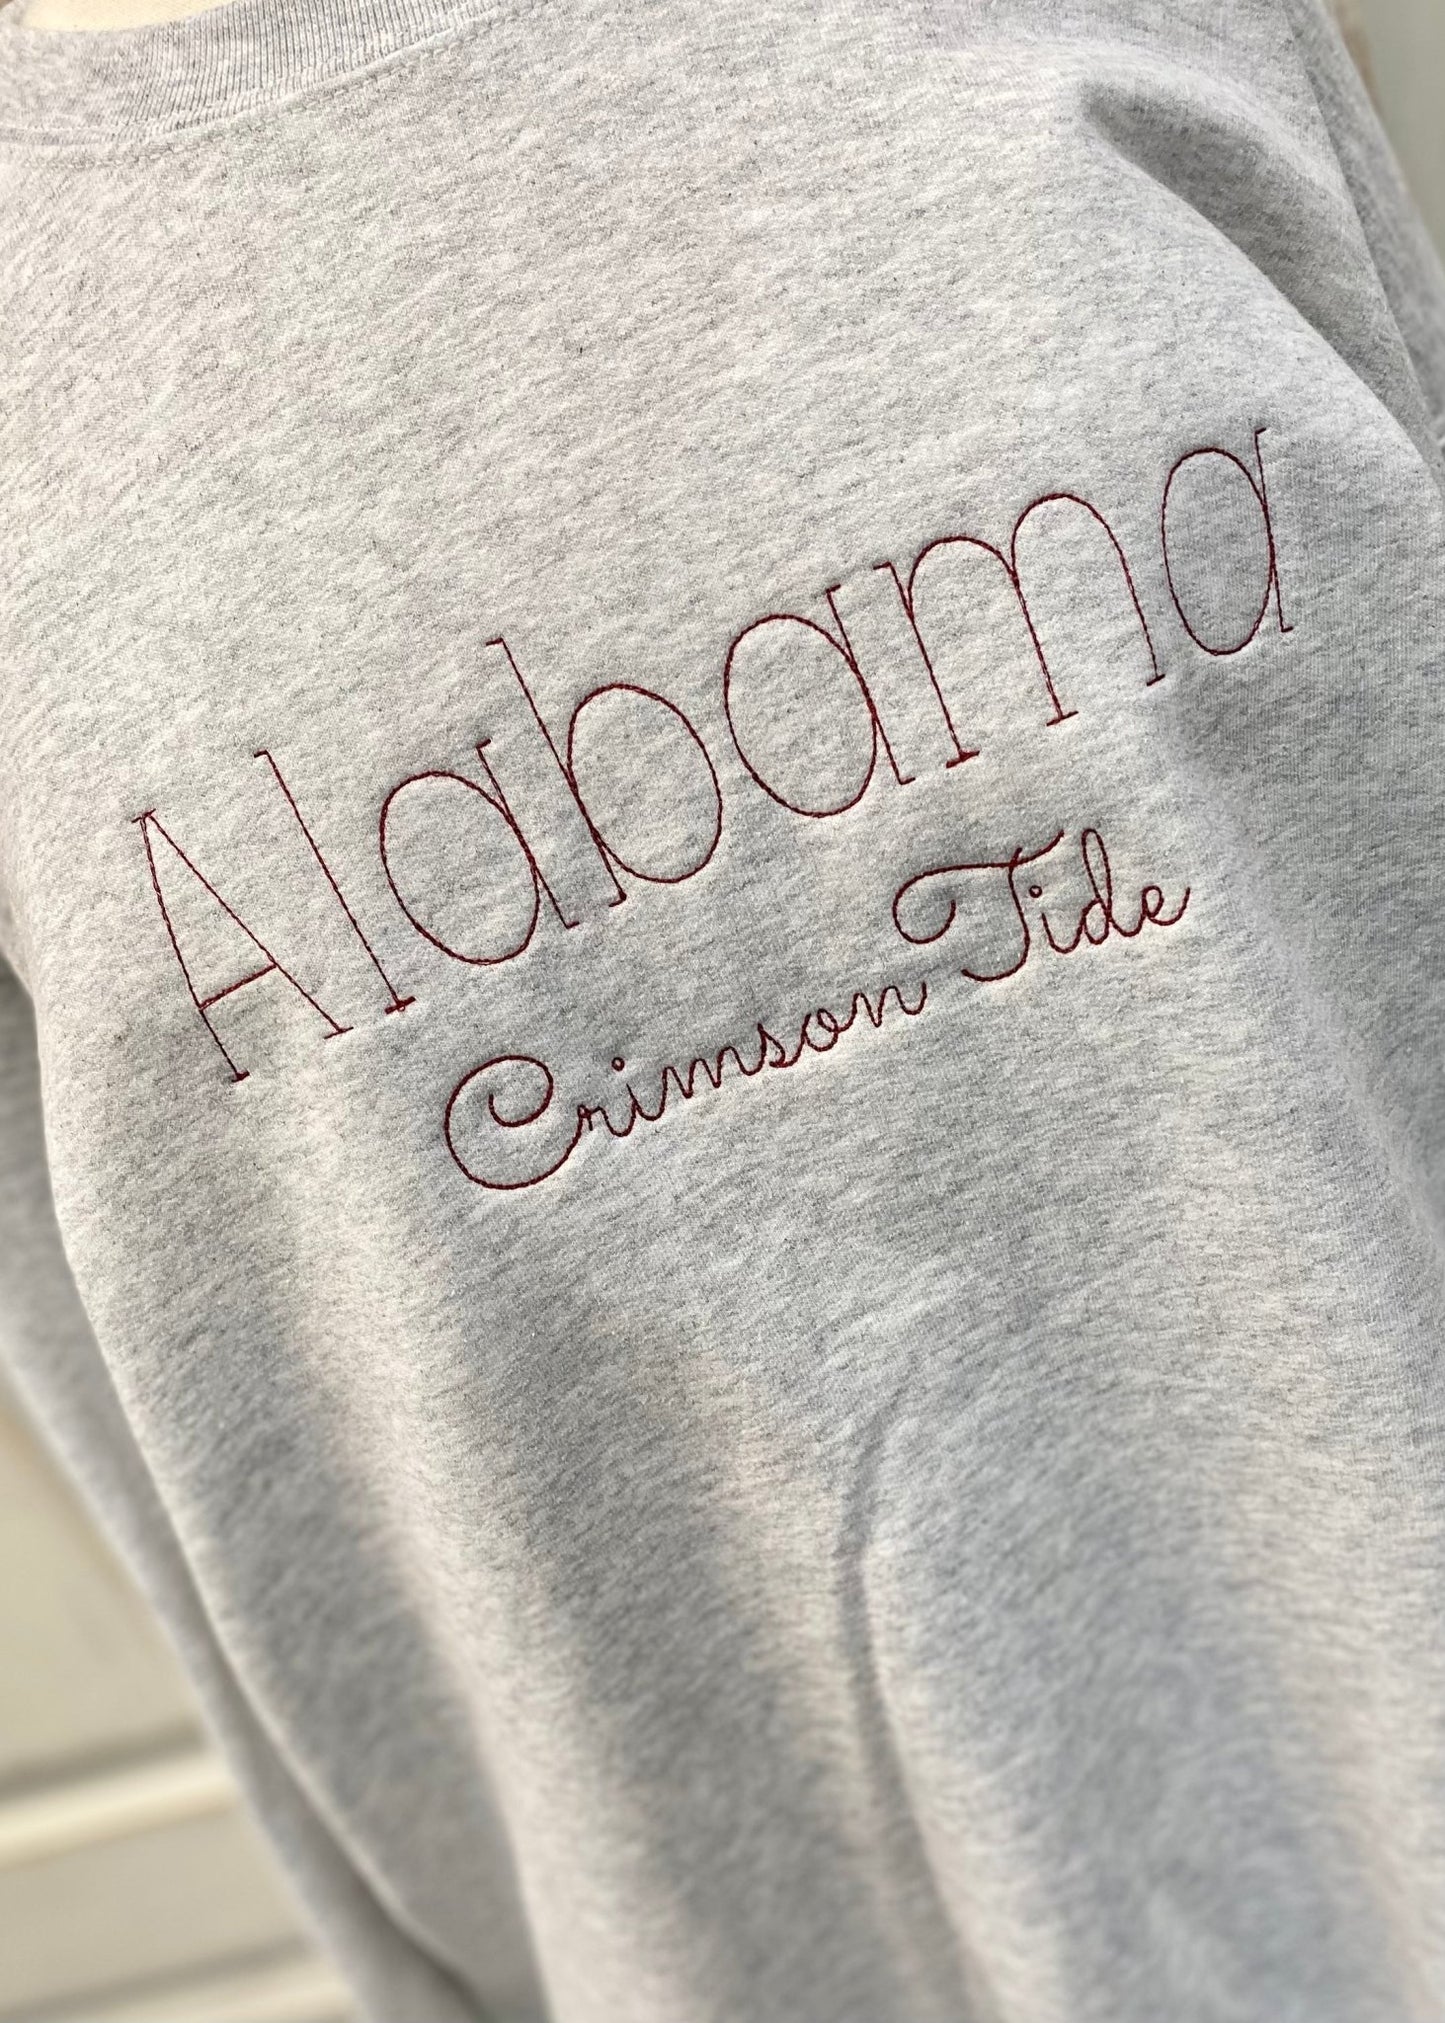 Alabama Crimson Tide Stitched Sweatshirt - Light Grey - Jimberly's Boutique